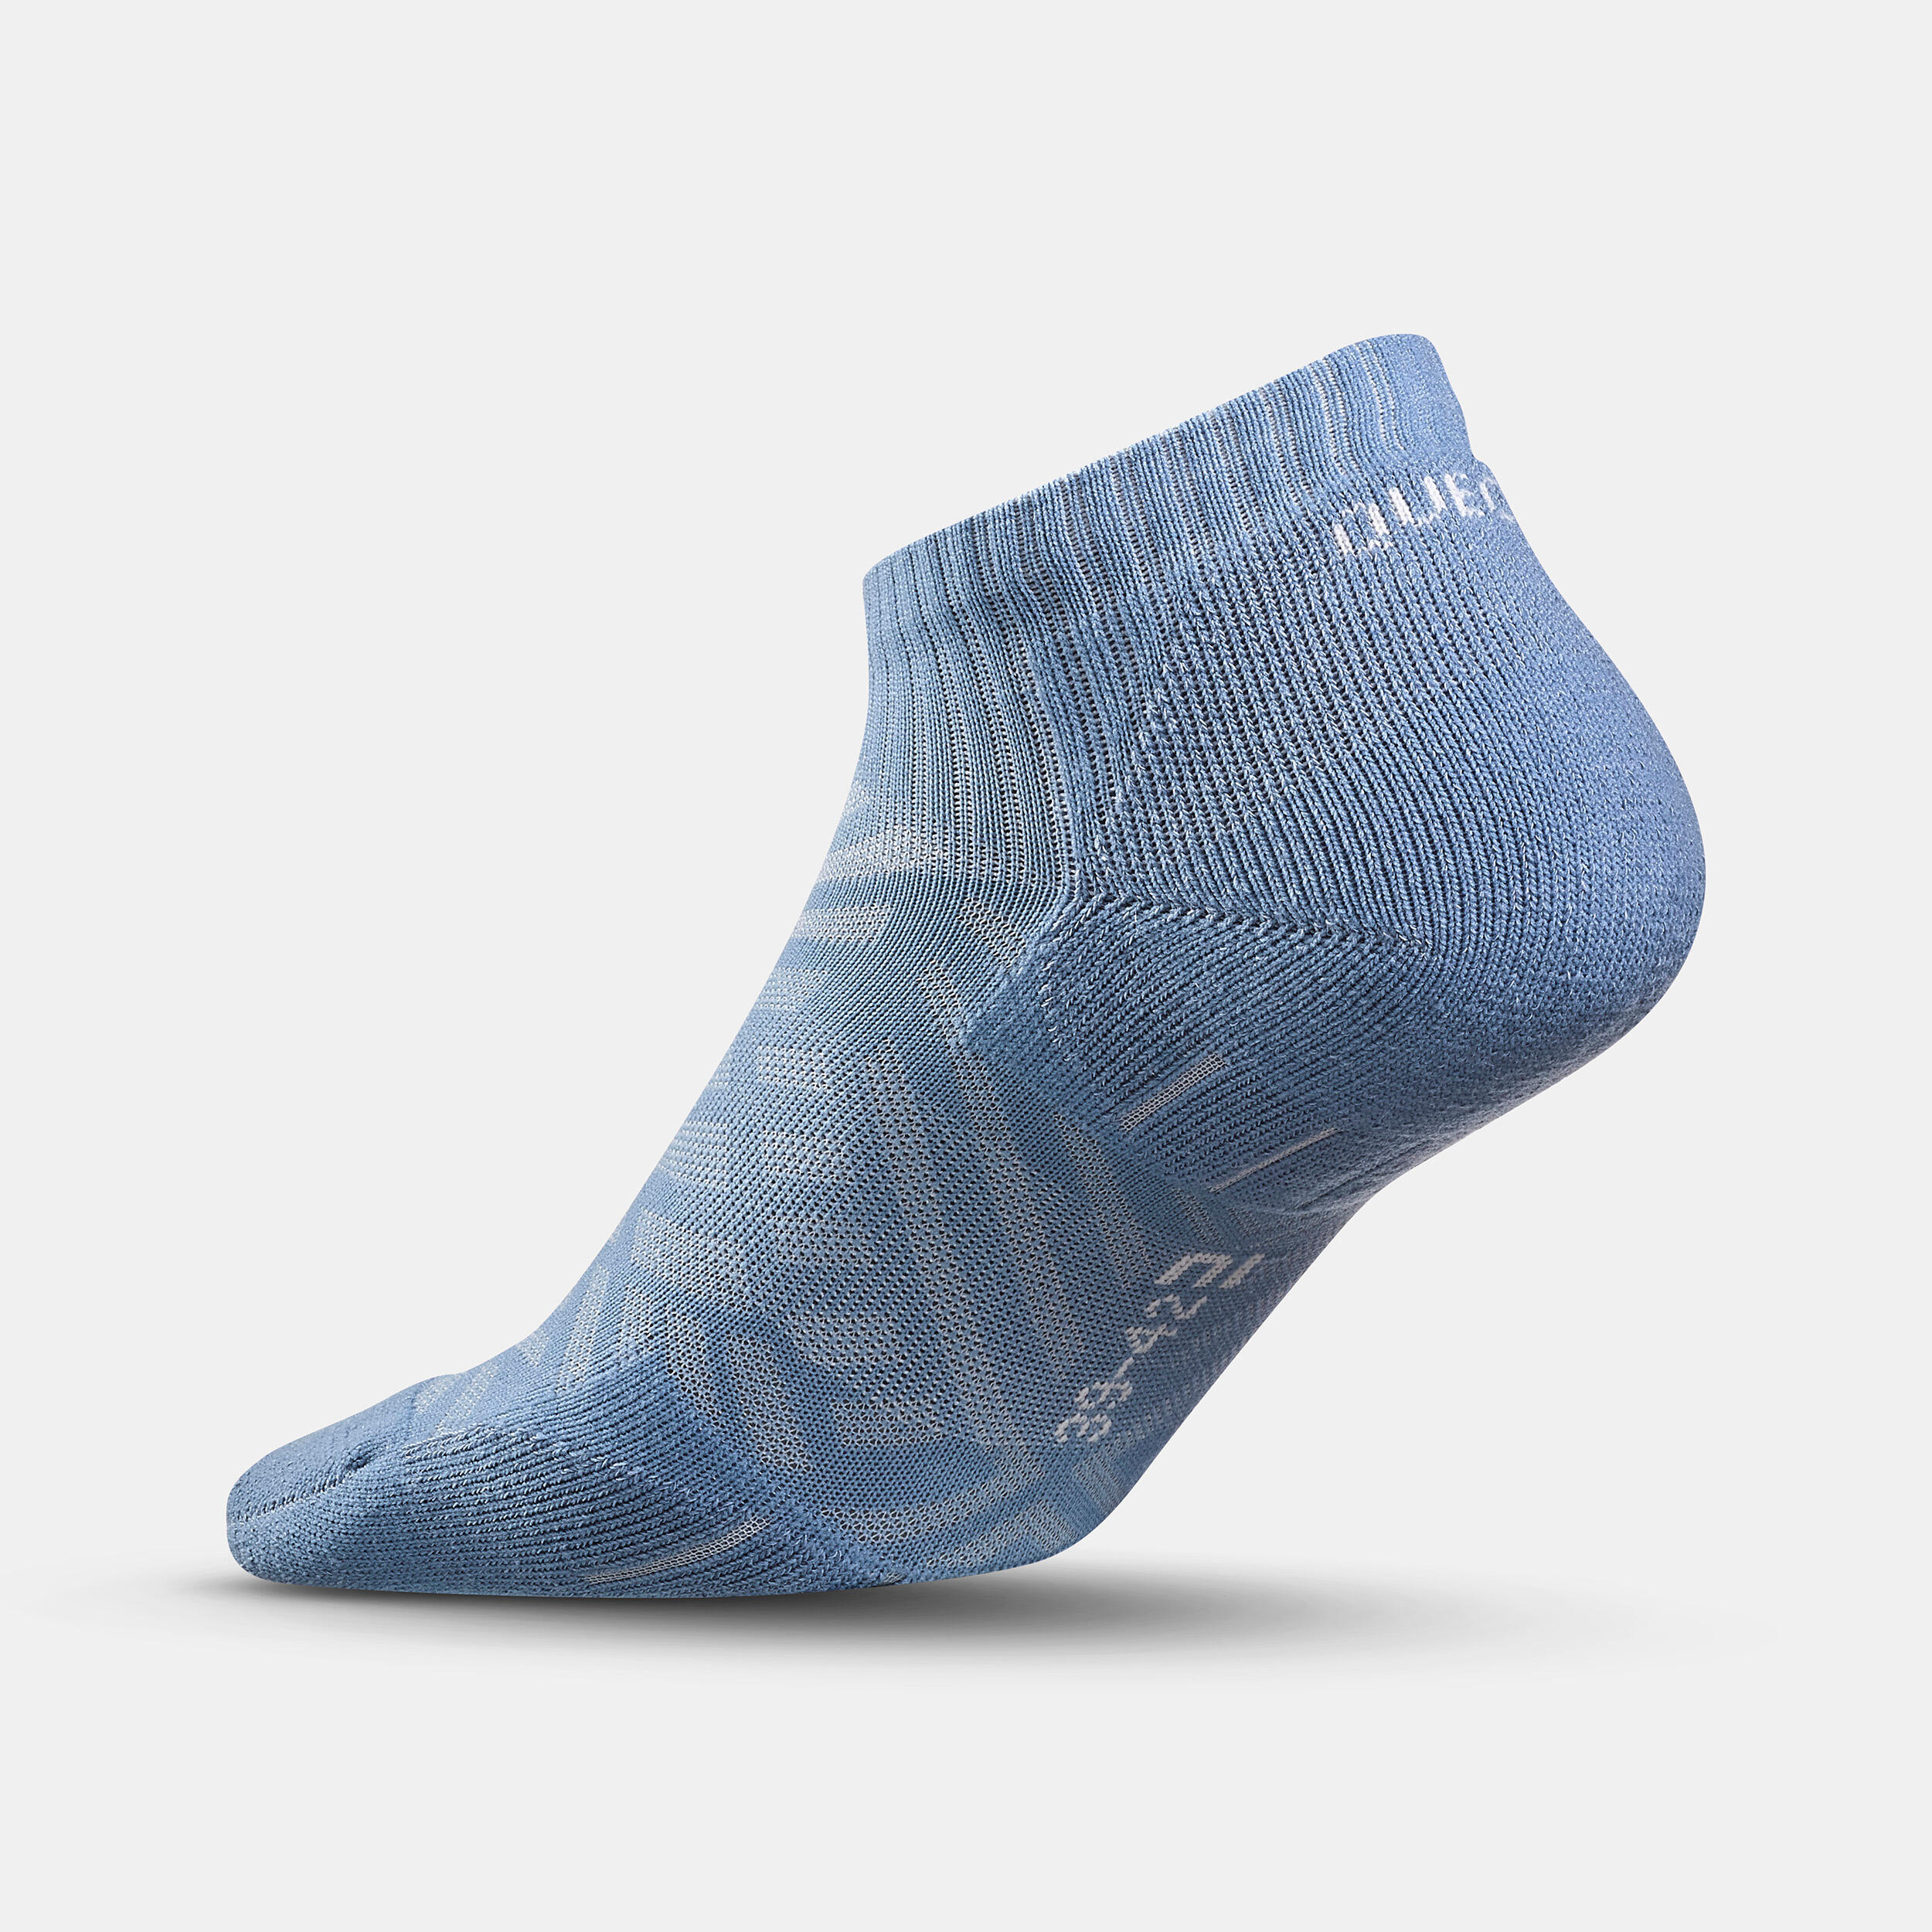 Hike 100 Low Socks  - Light Blue- Pack of 2 pairs 4/5